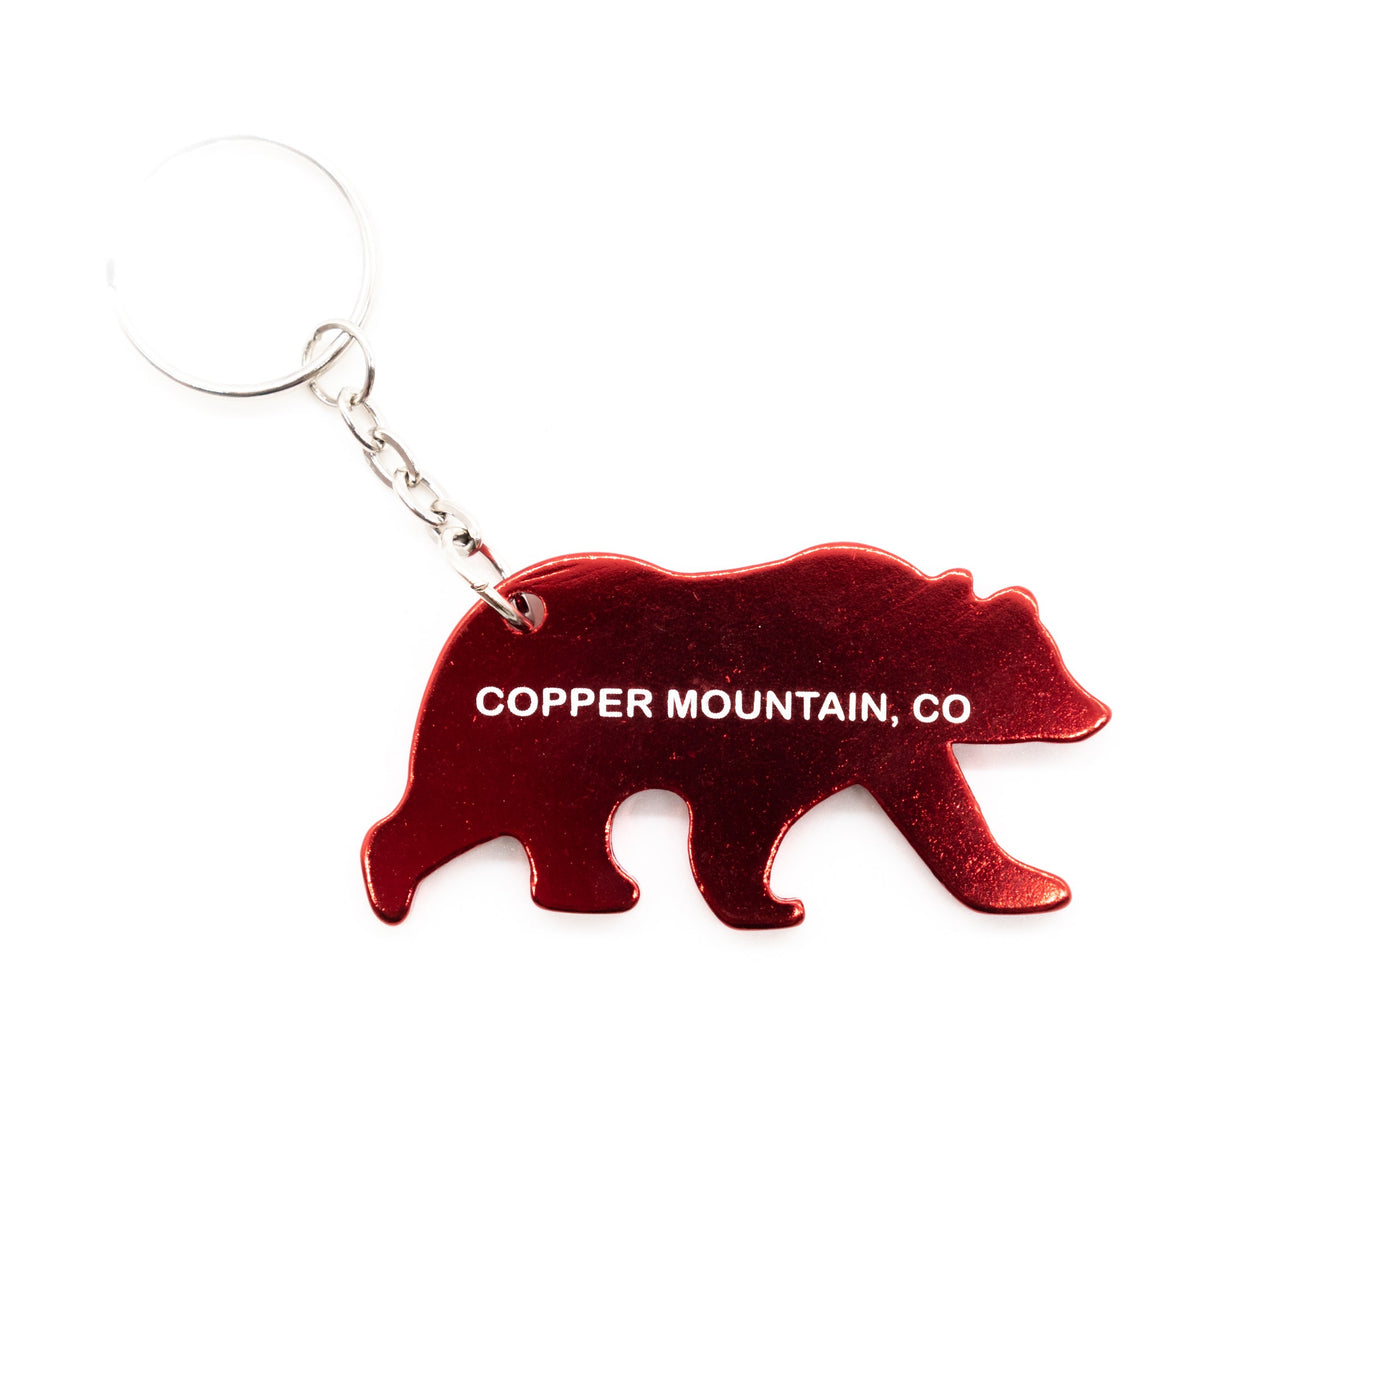 Copper Mountain Bear Keychain with Bottle Opener